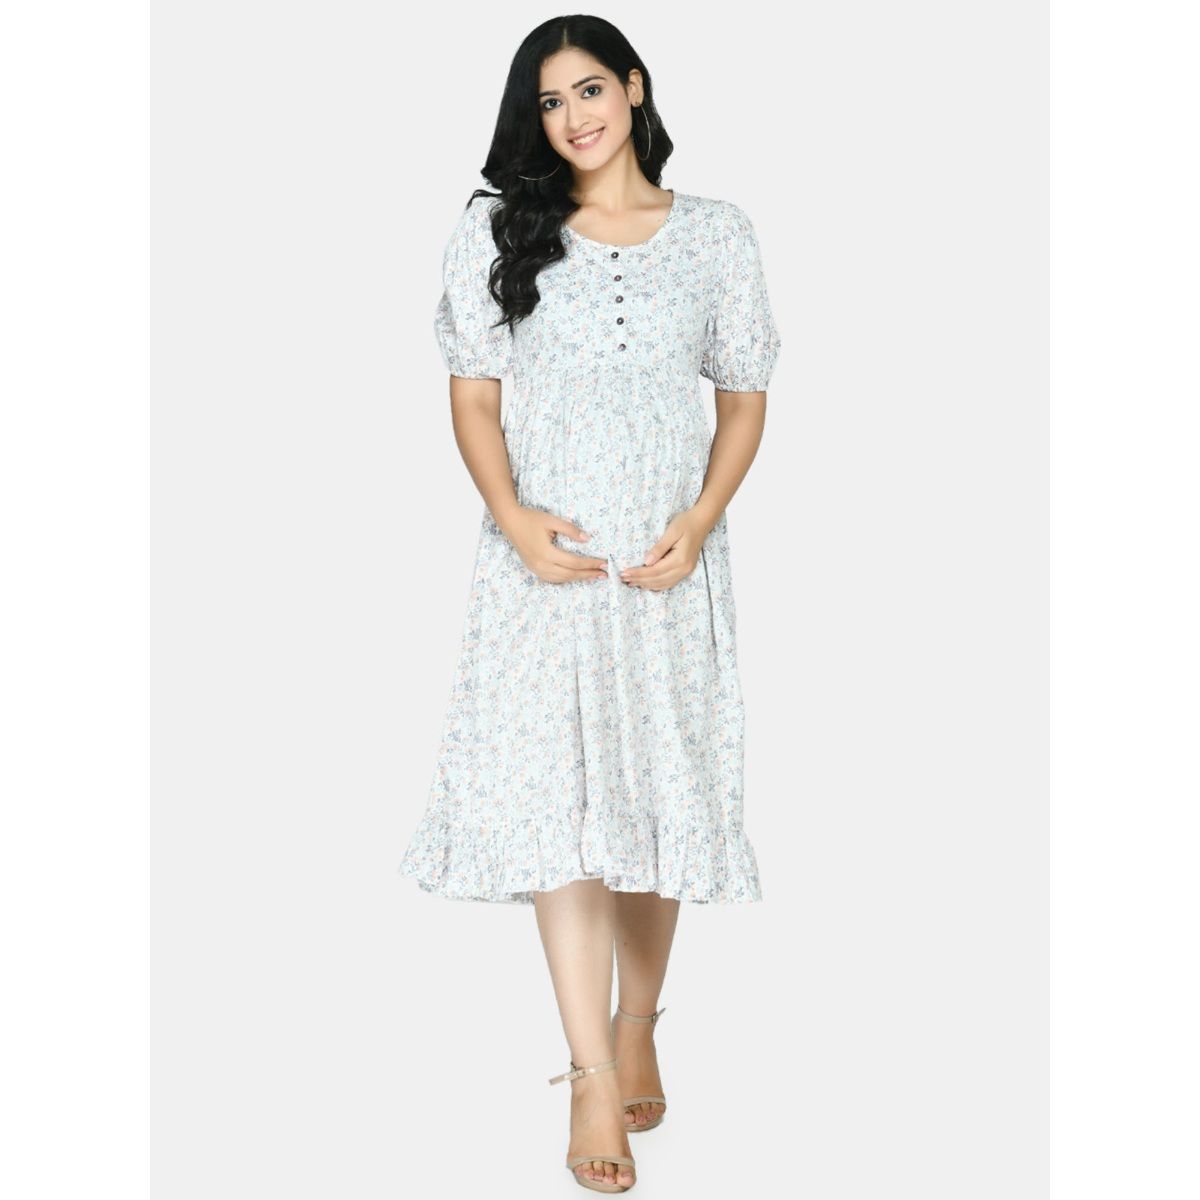 Buy Baby Girl Dresses  Frocks Online in India at Best Price  Looksgudin